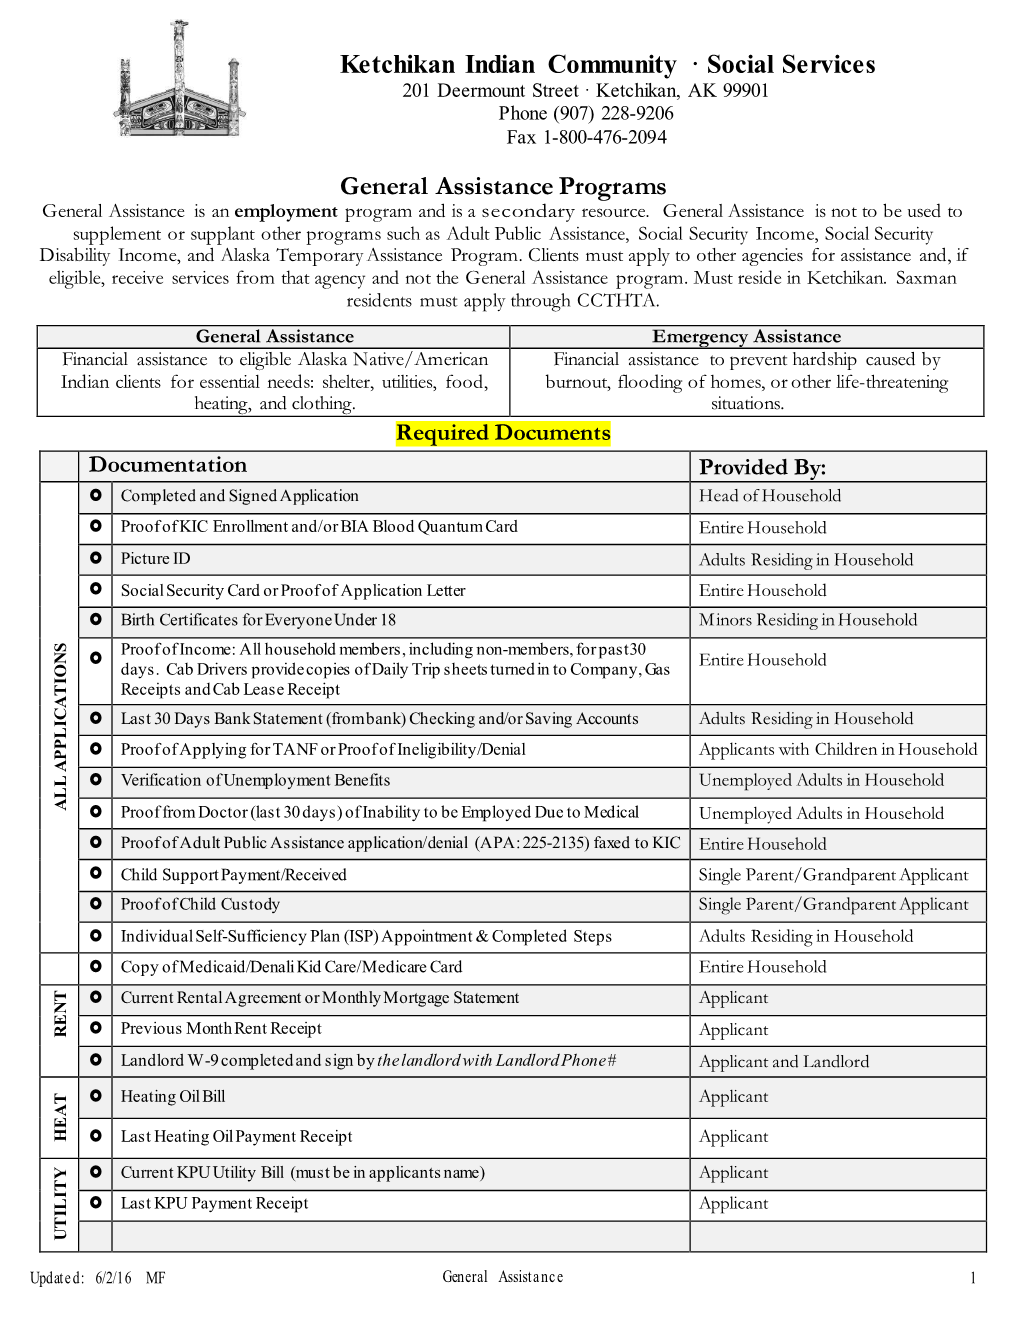 Social Services General Assistance Programs